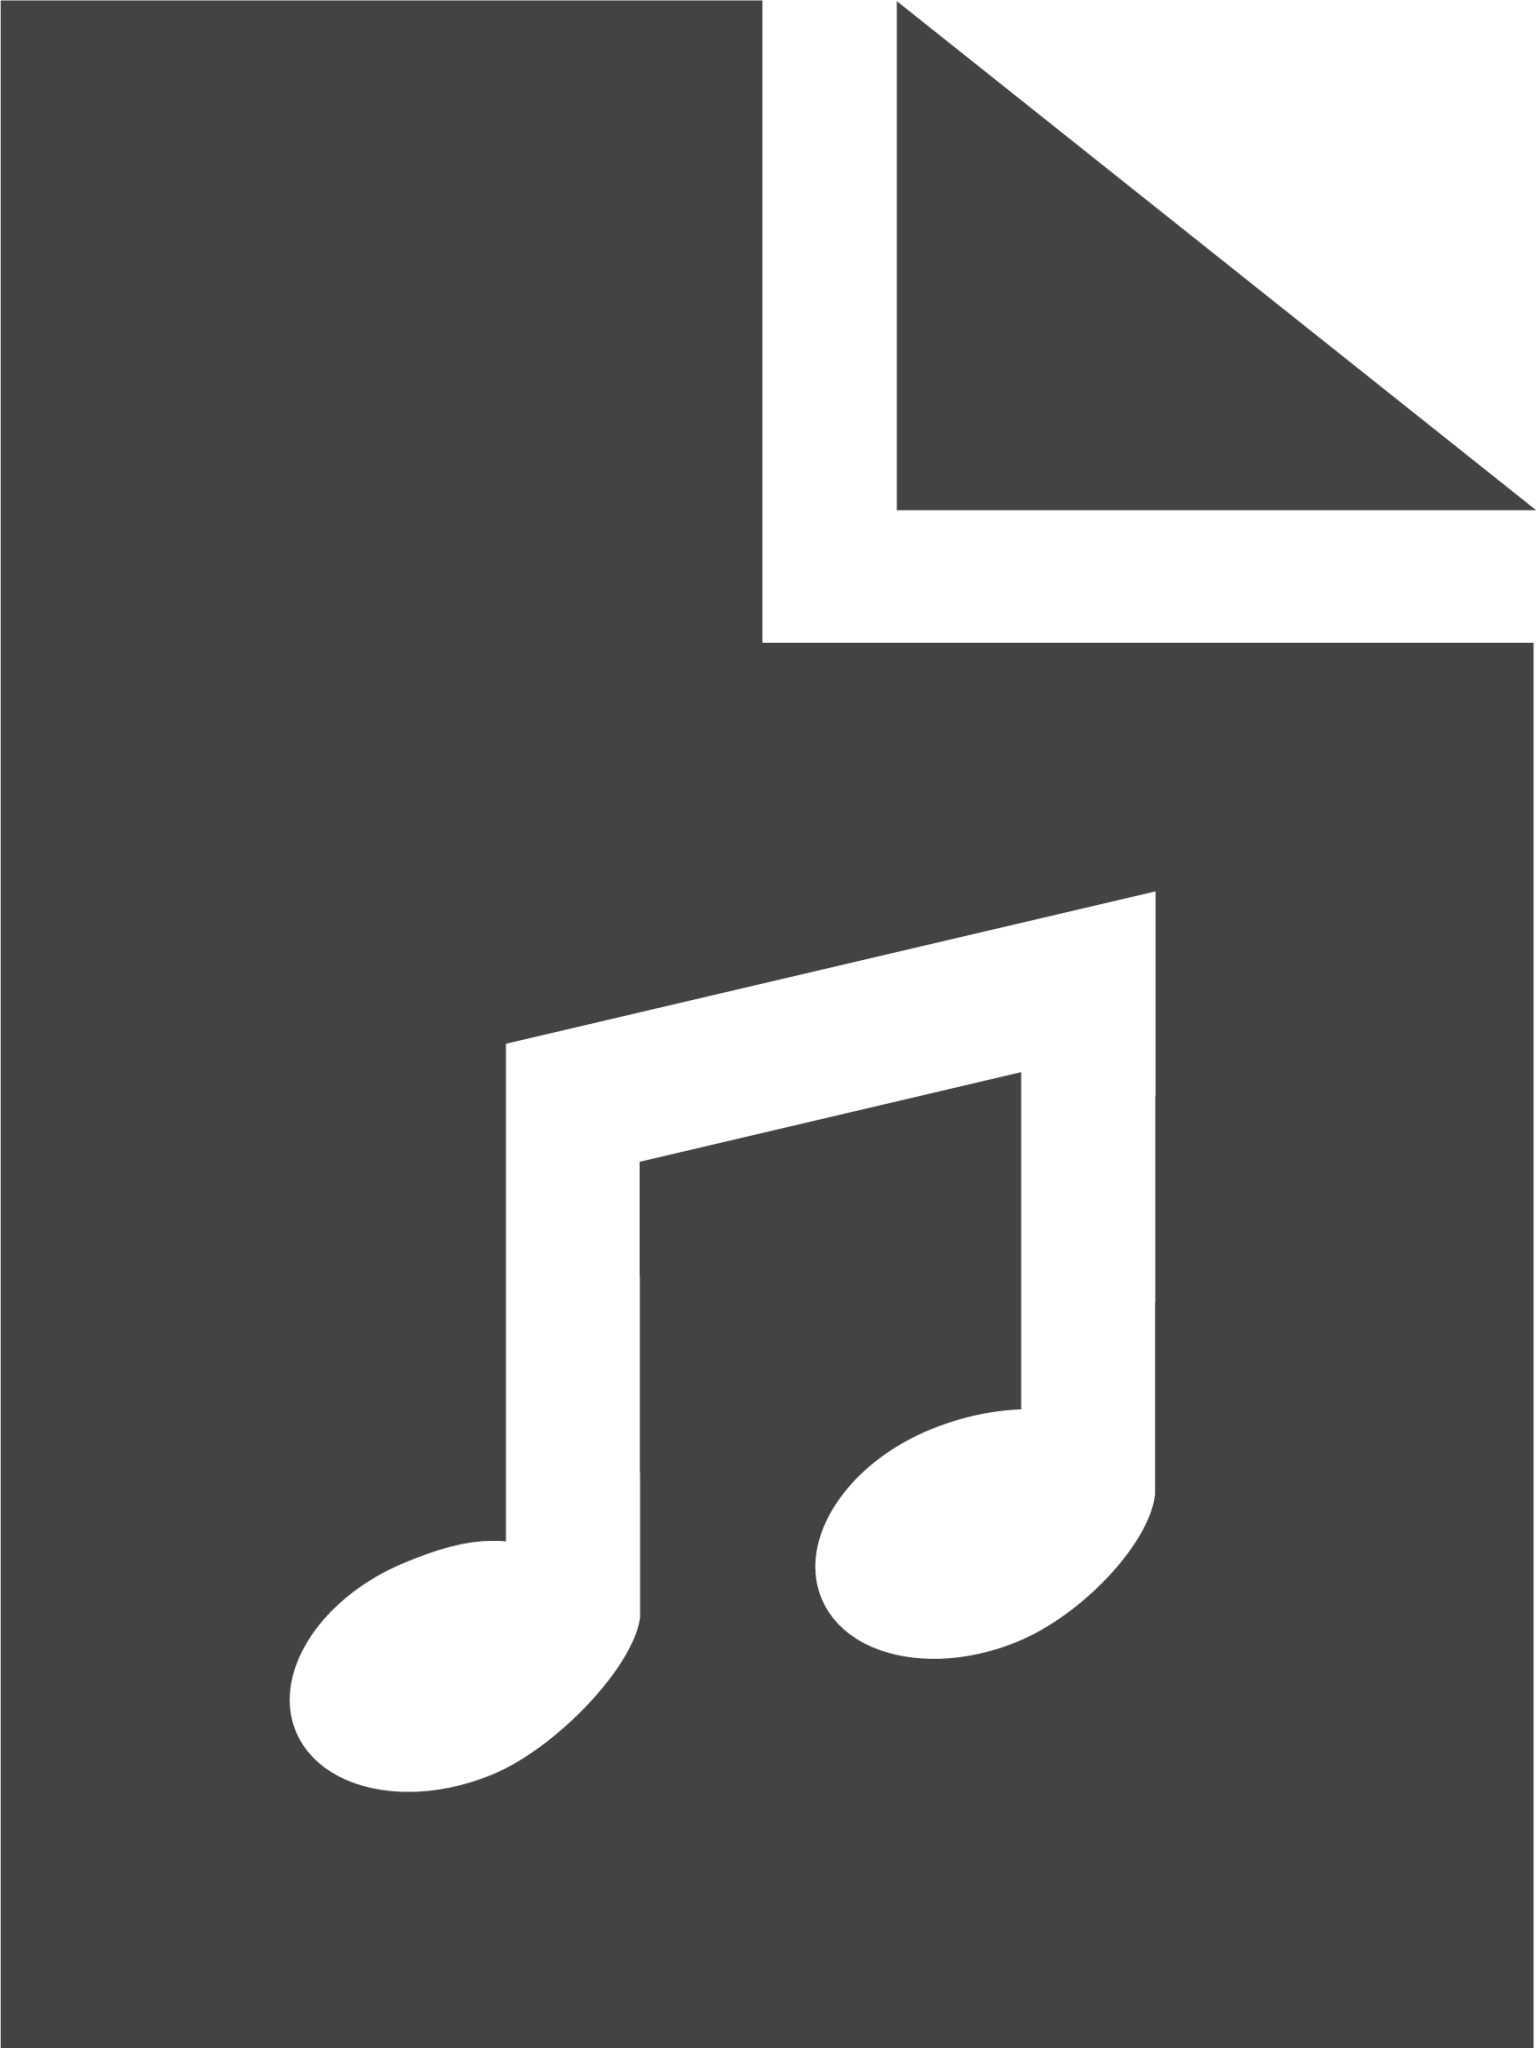 document music icon